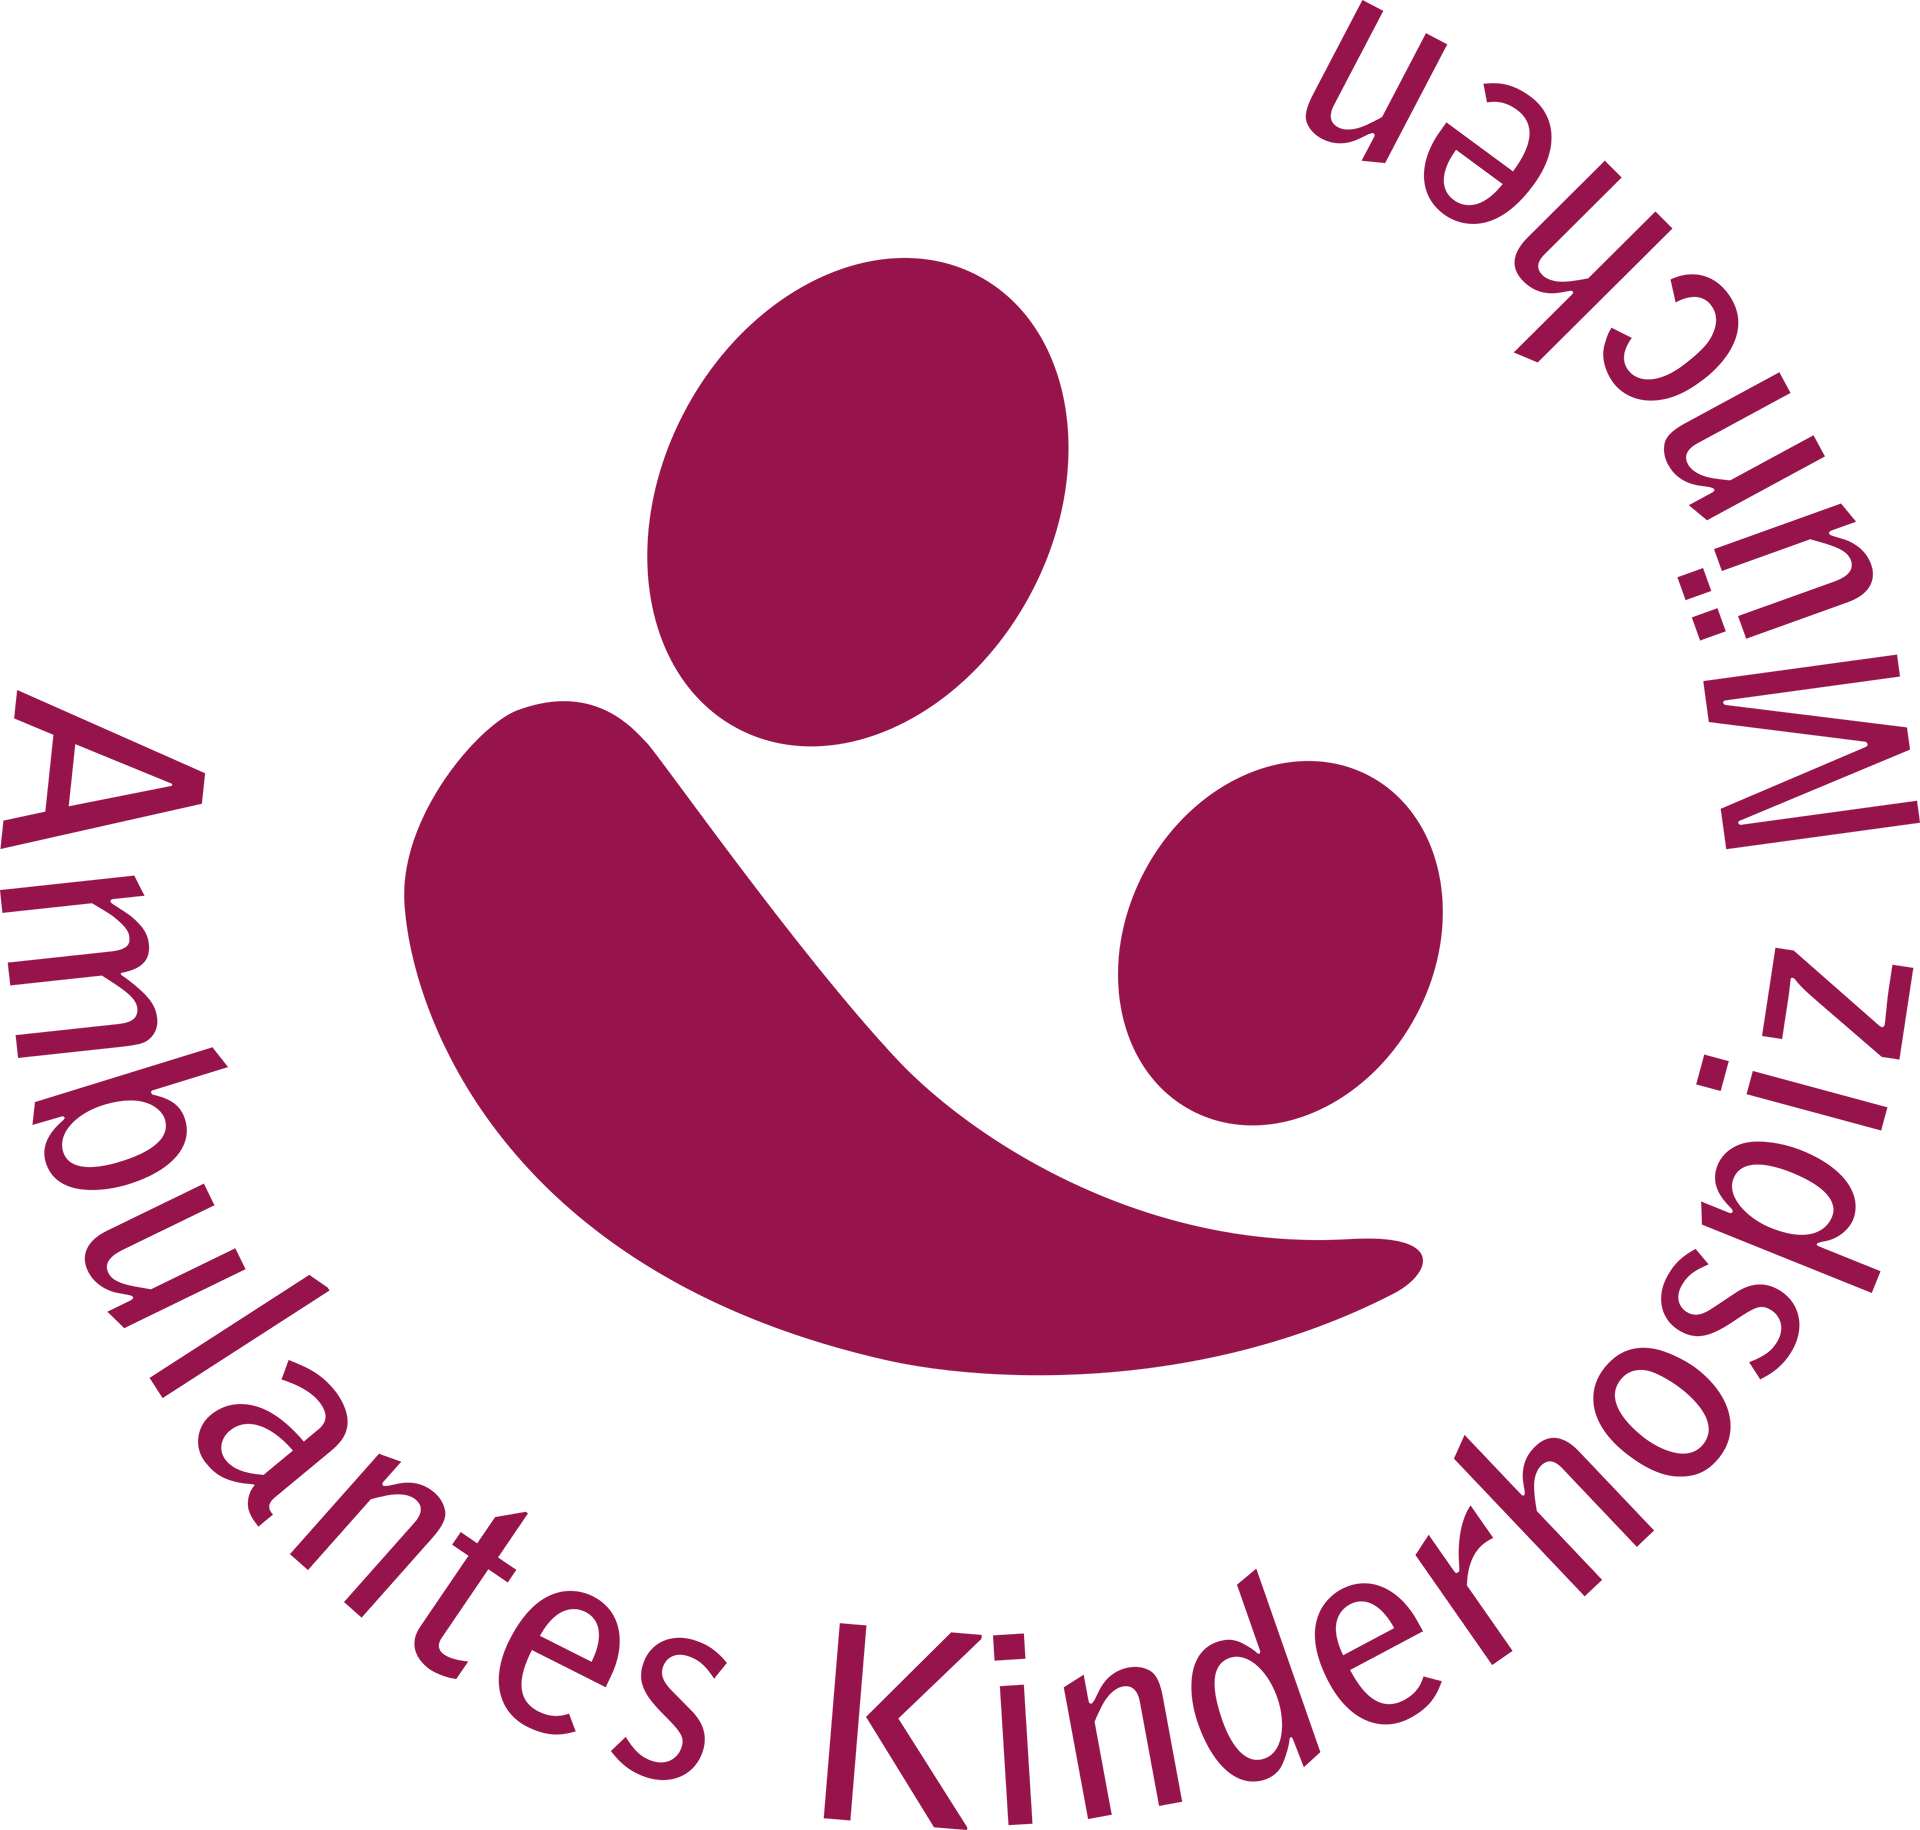 Stiftung Ambulantes Kinderhospiz München